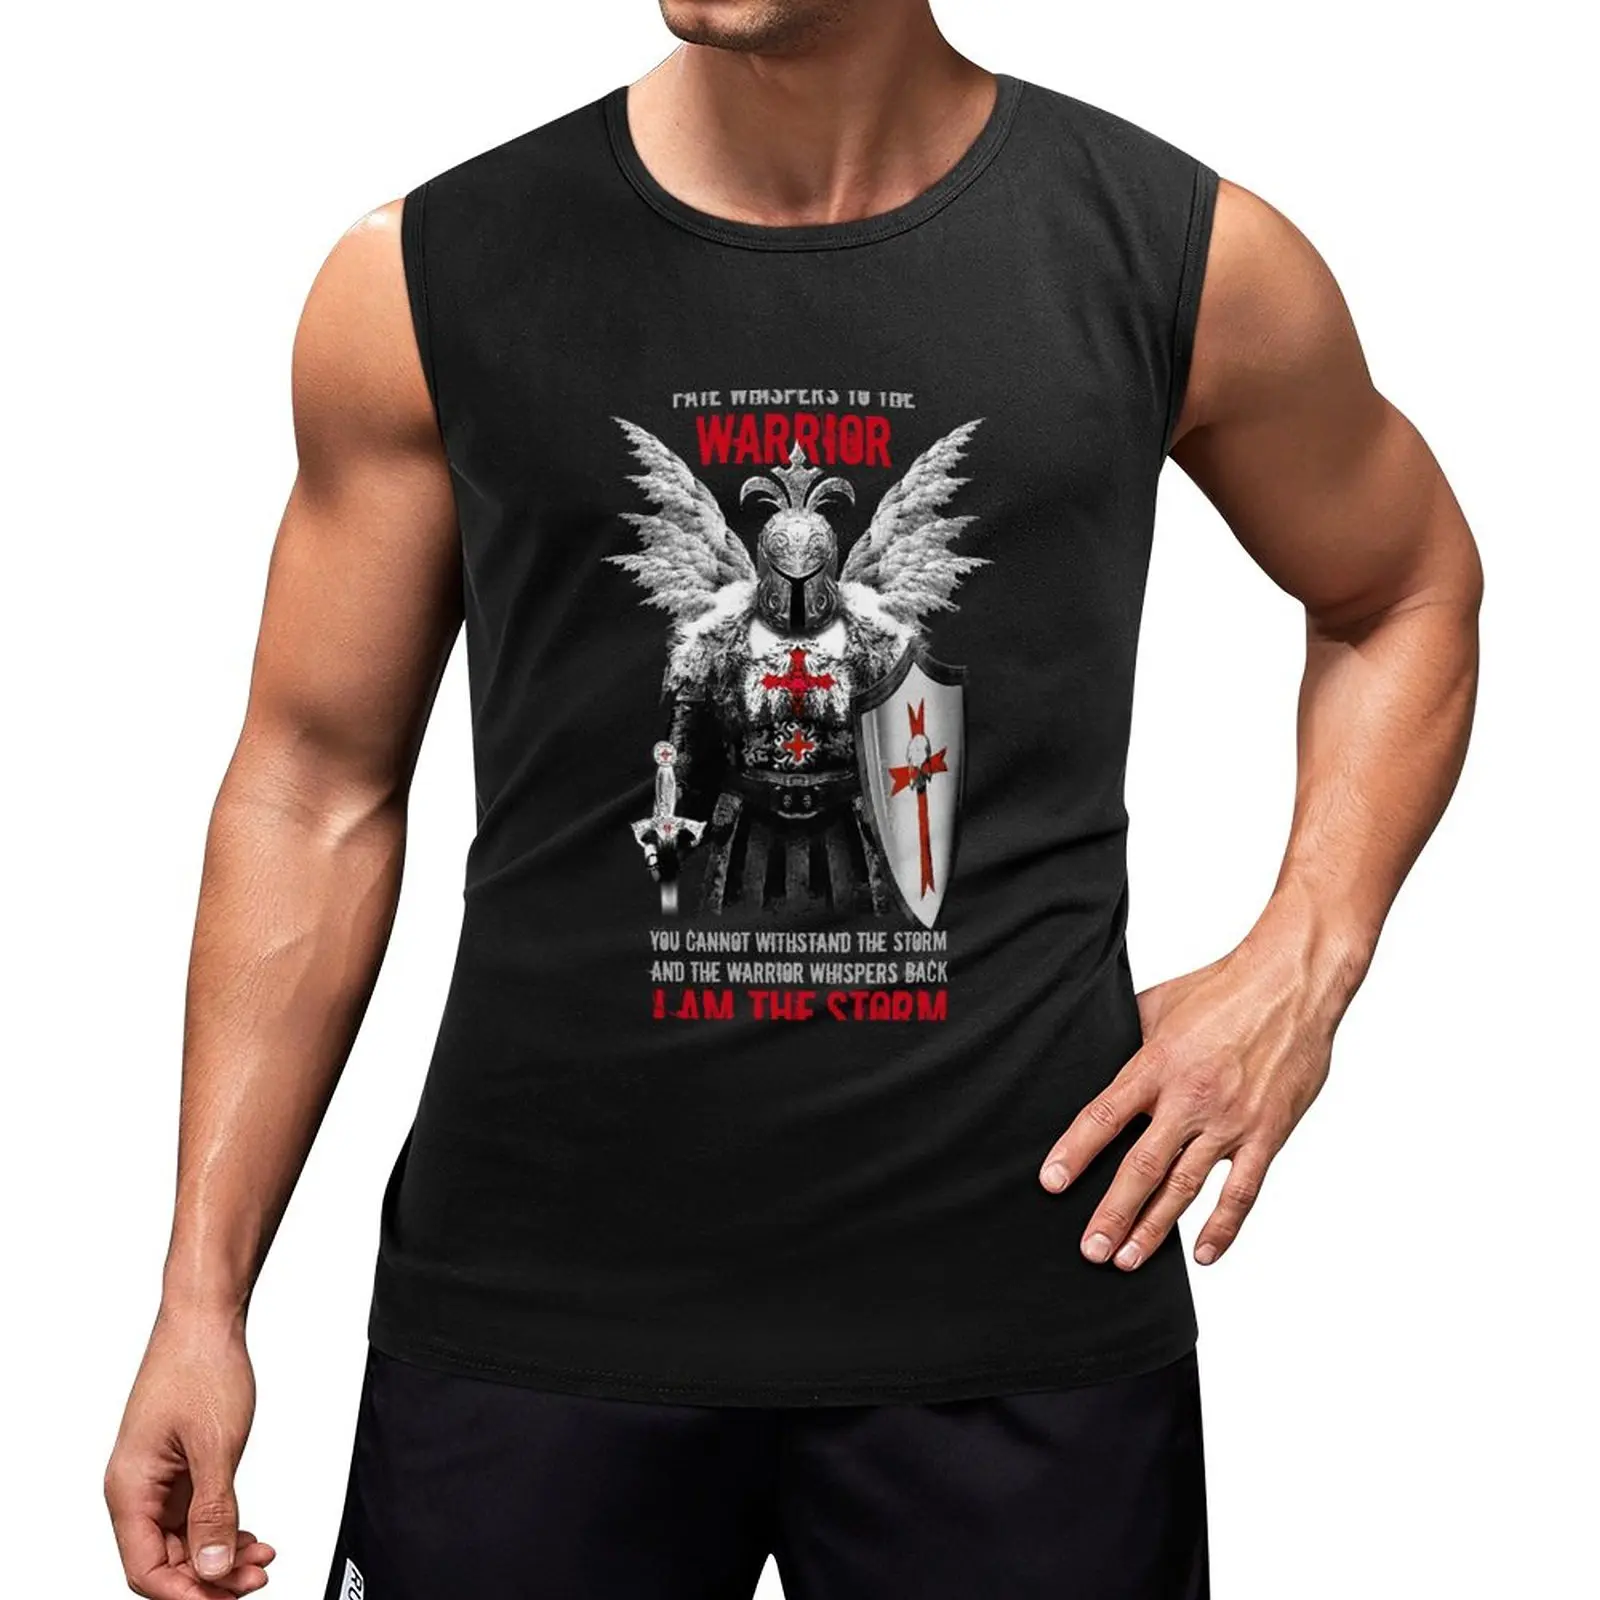 

New Knights Templar Warrior Tank Top gym accessories man Gym wear muscle t-shirt man vest